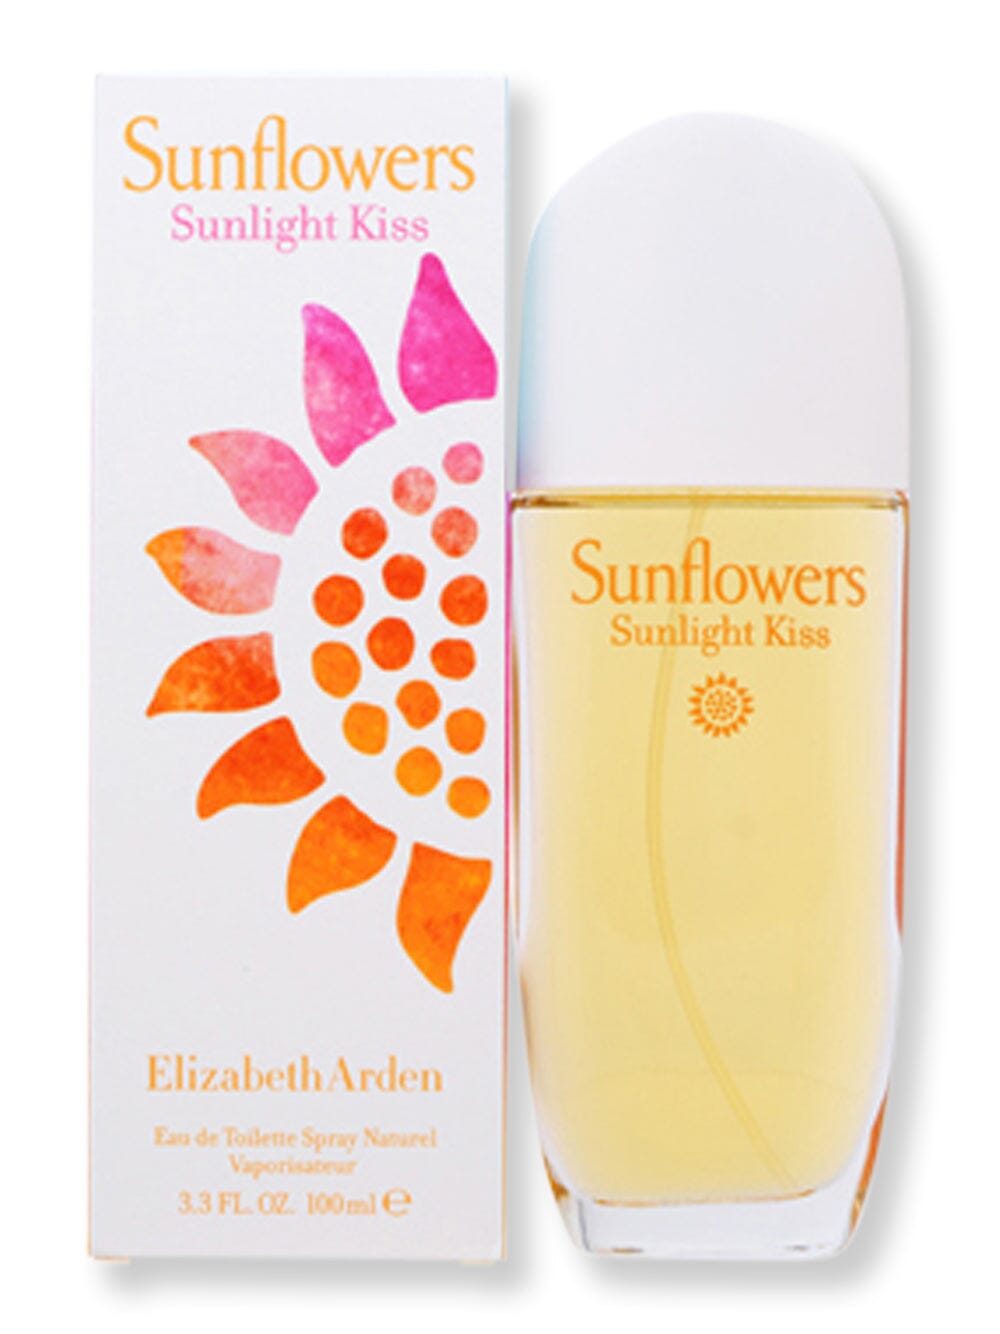 Elizabeth Arden Elizabeth Arden Sunflowers Sunlight Kiss EDT Spray 3.3 oz100 ml Perfume 